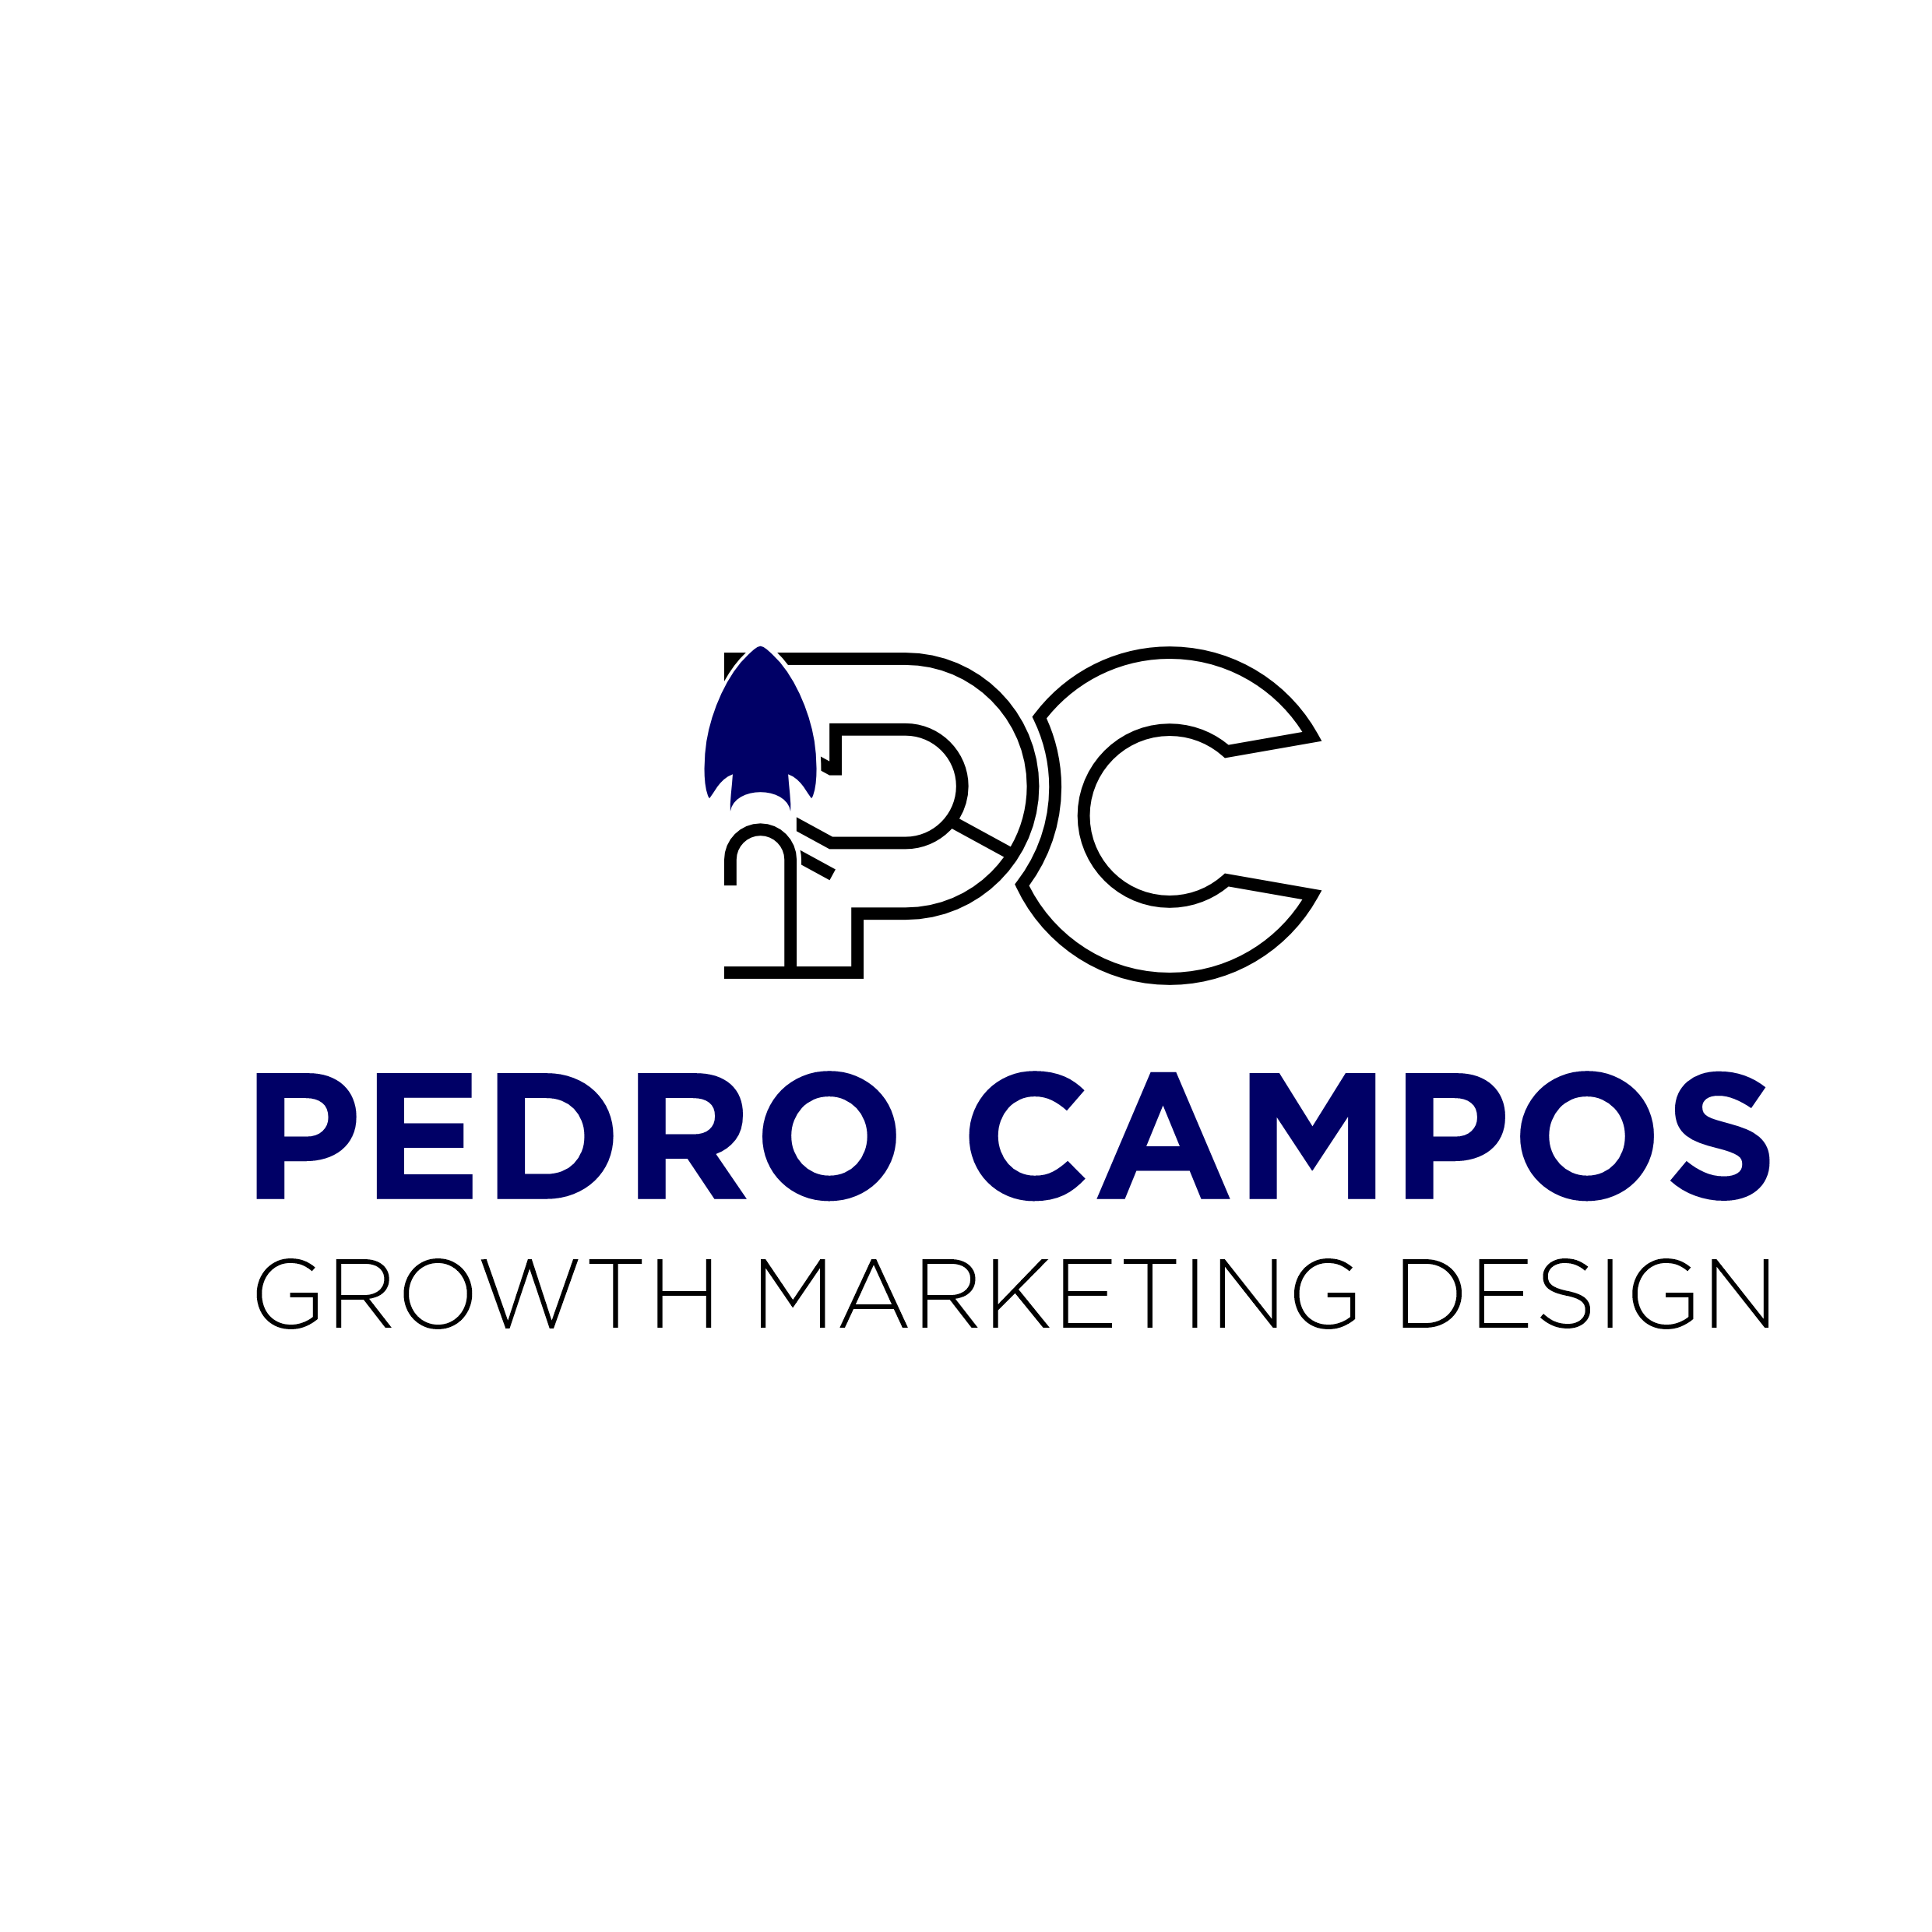 PEDRO CAMPOS Growth Marketing Design